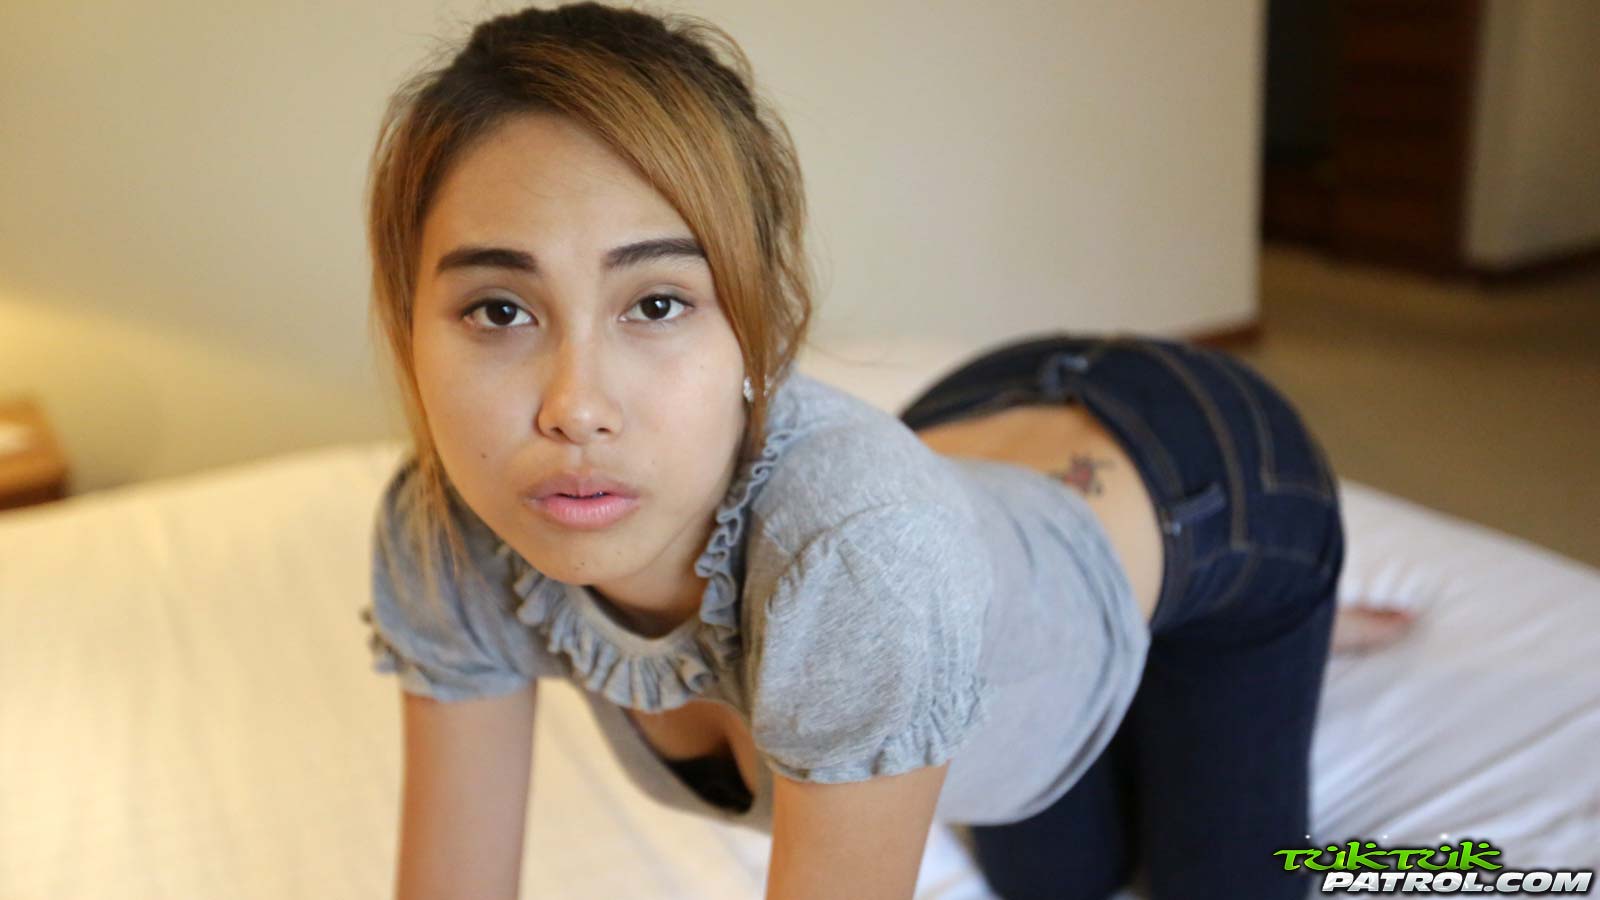 Cute Small-tittied Thai Teen With Bubble Butt Fucks Stranger In Hotel